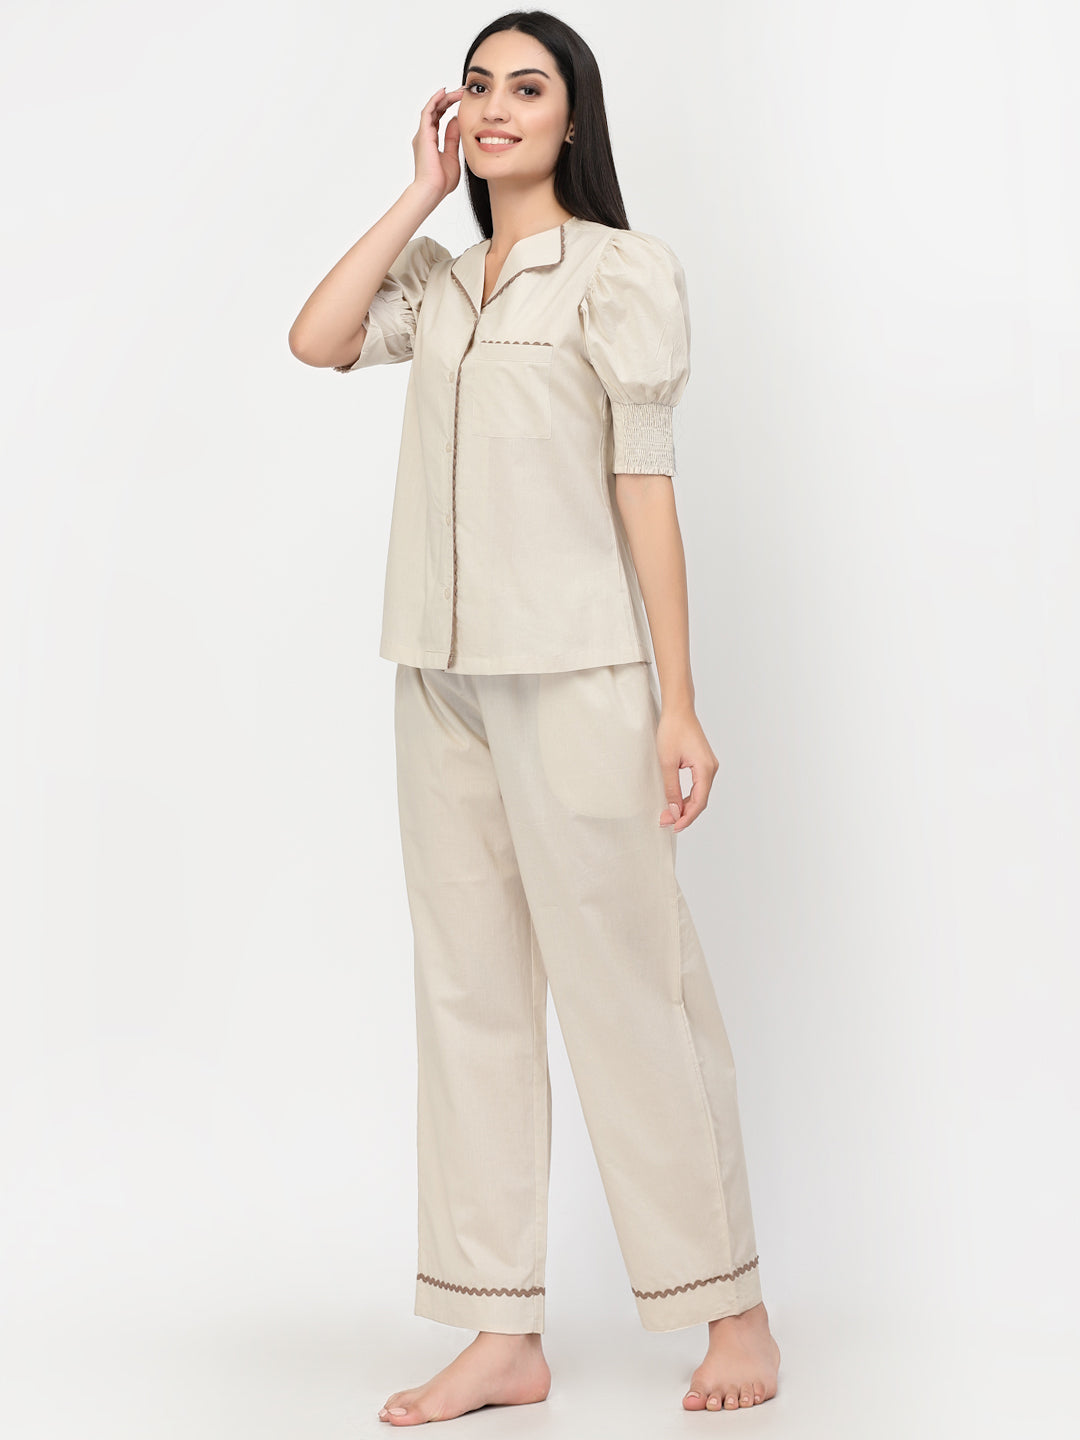 Blanc9 Beige With Light Brown Lace Cotton Pyjama Night Suit-B9NW33BG